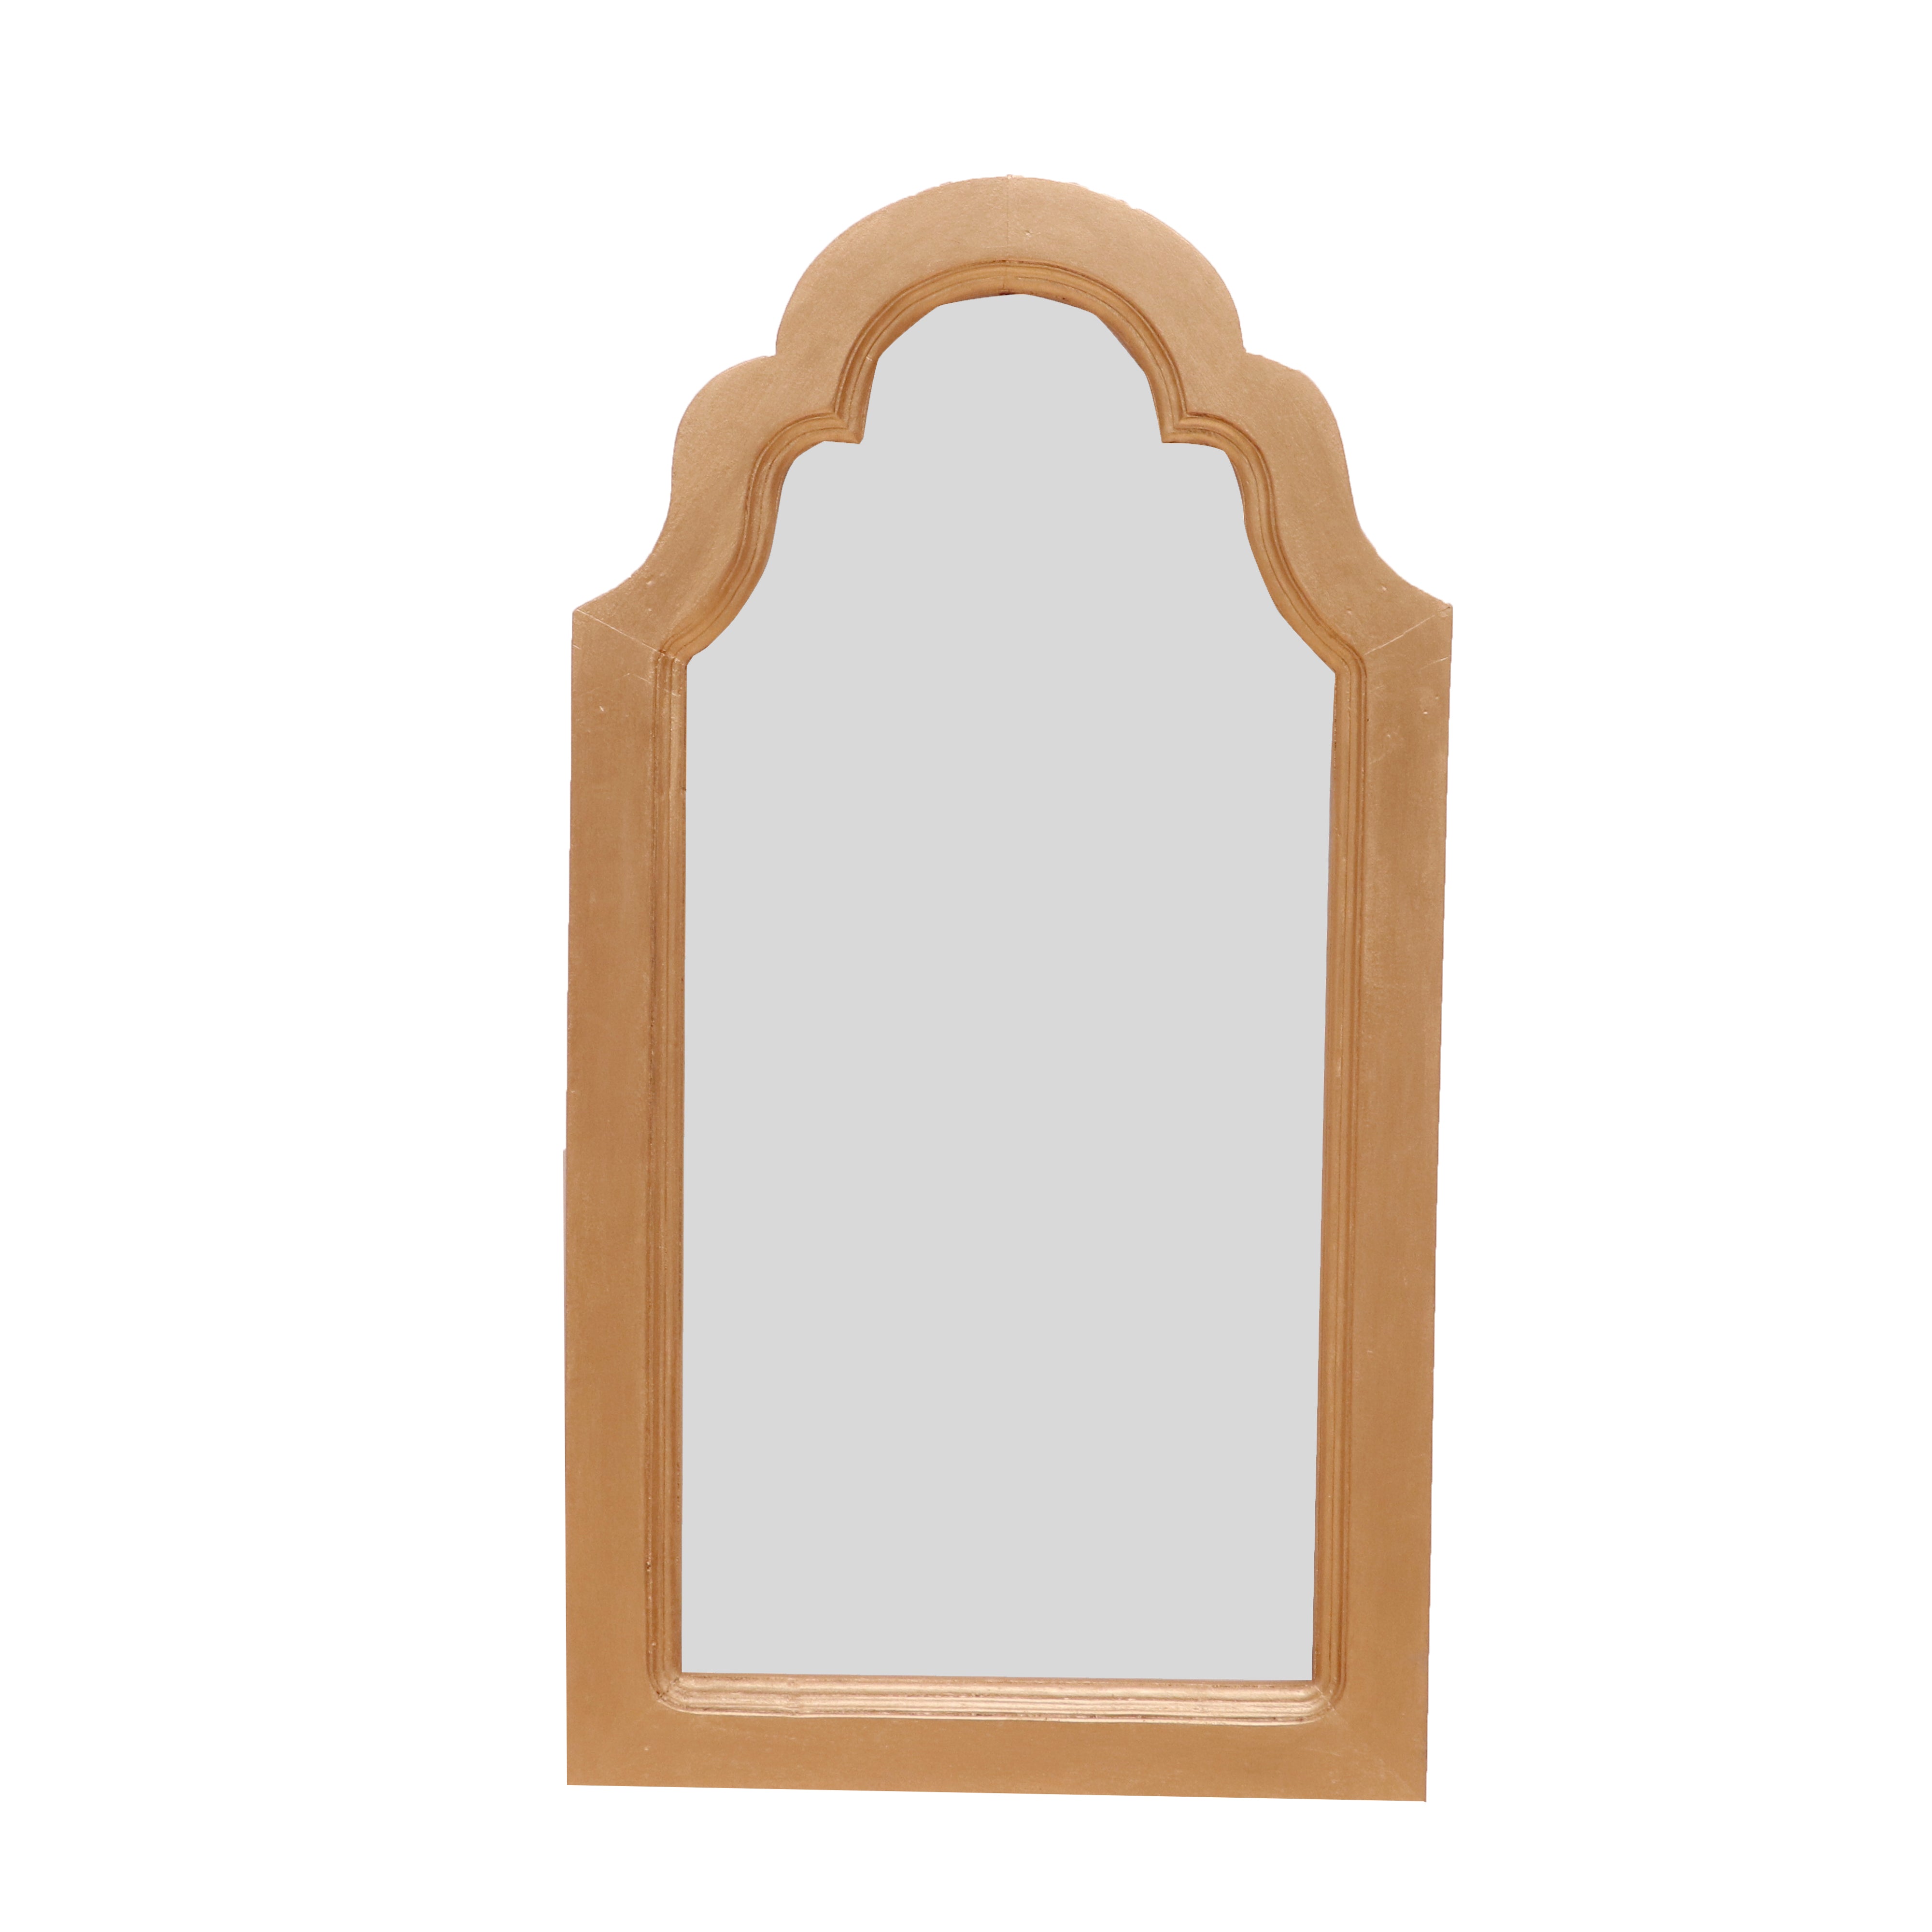 Royal Heritage Door Style Handmade Wooden Slim Border Mirror for Home Mirror